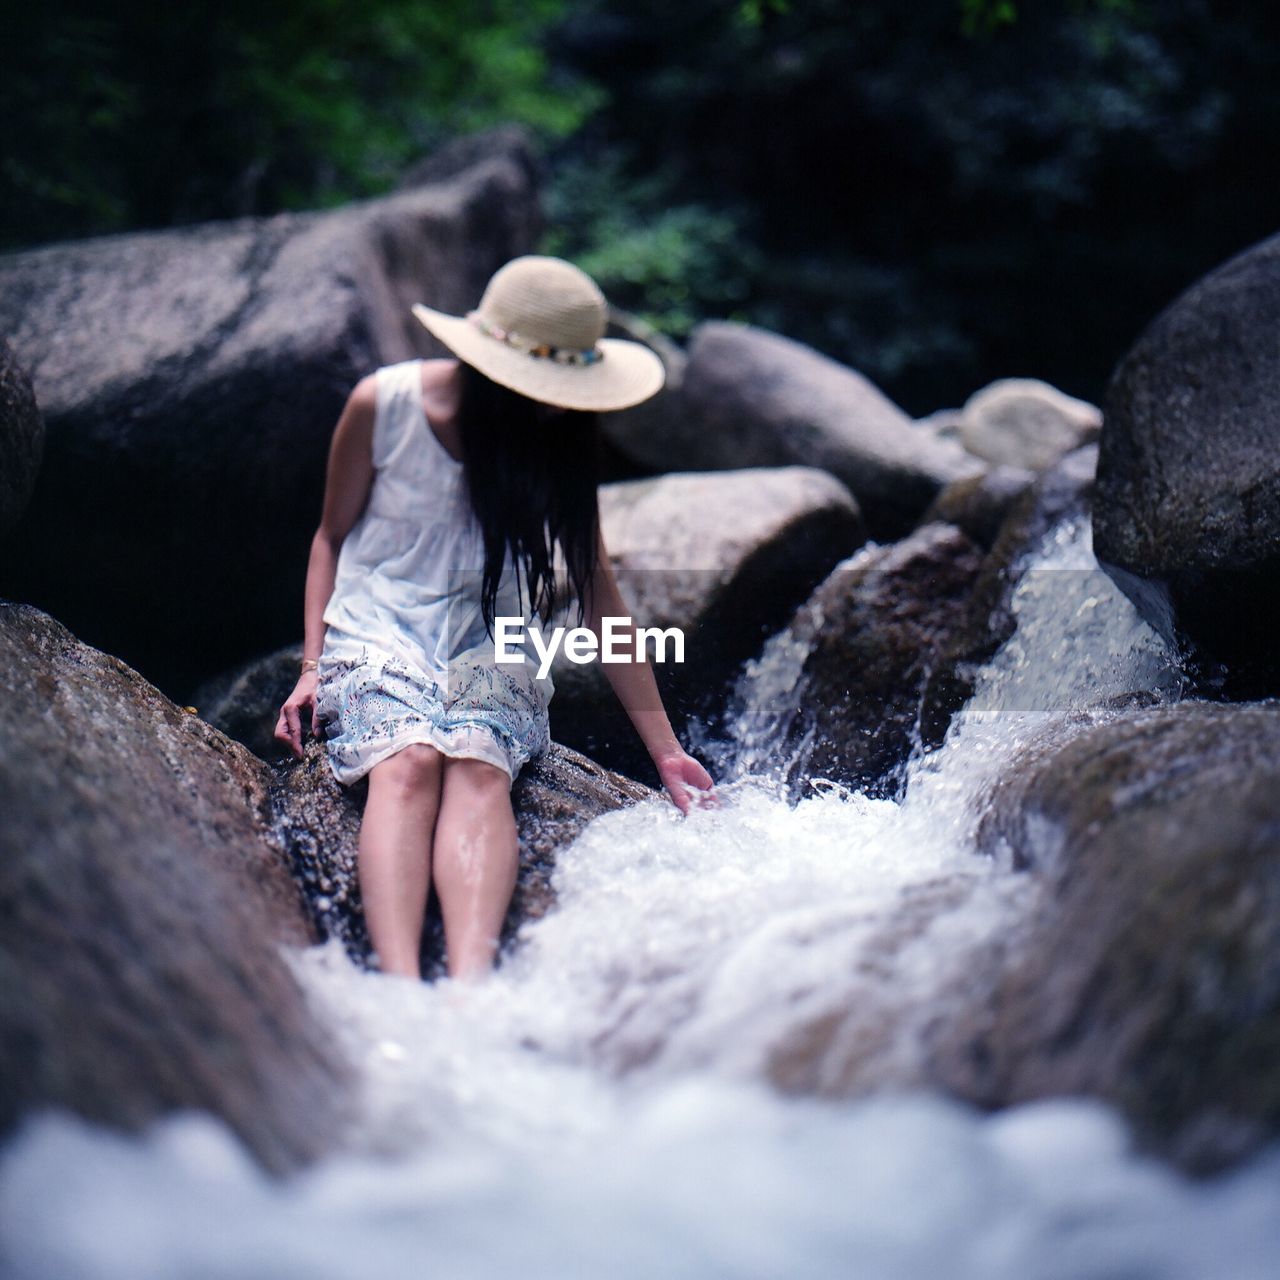 Woman sitting on rock in stream